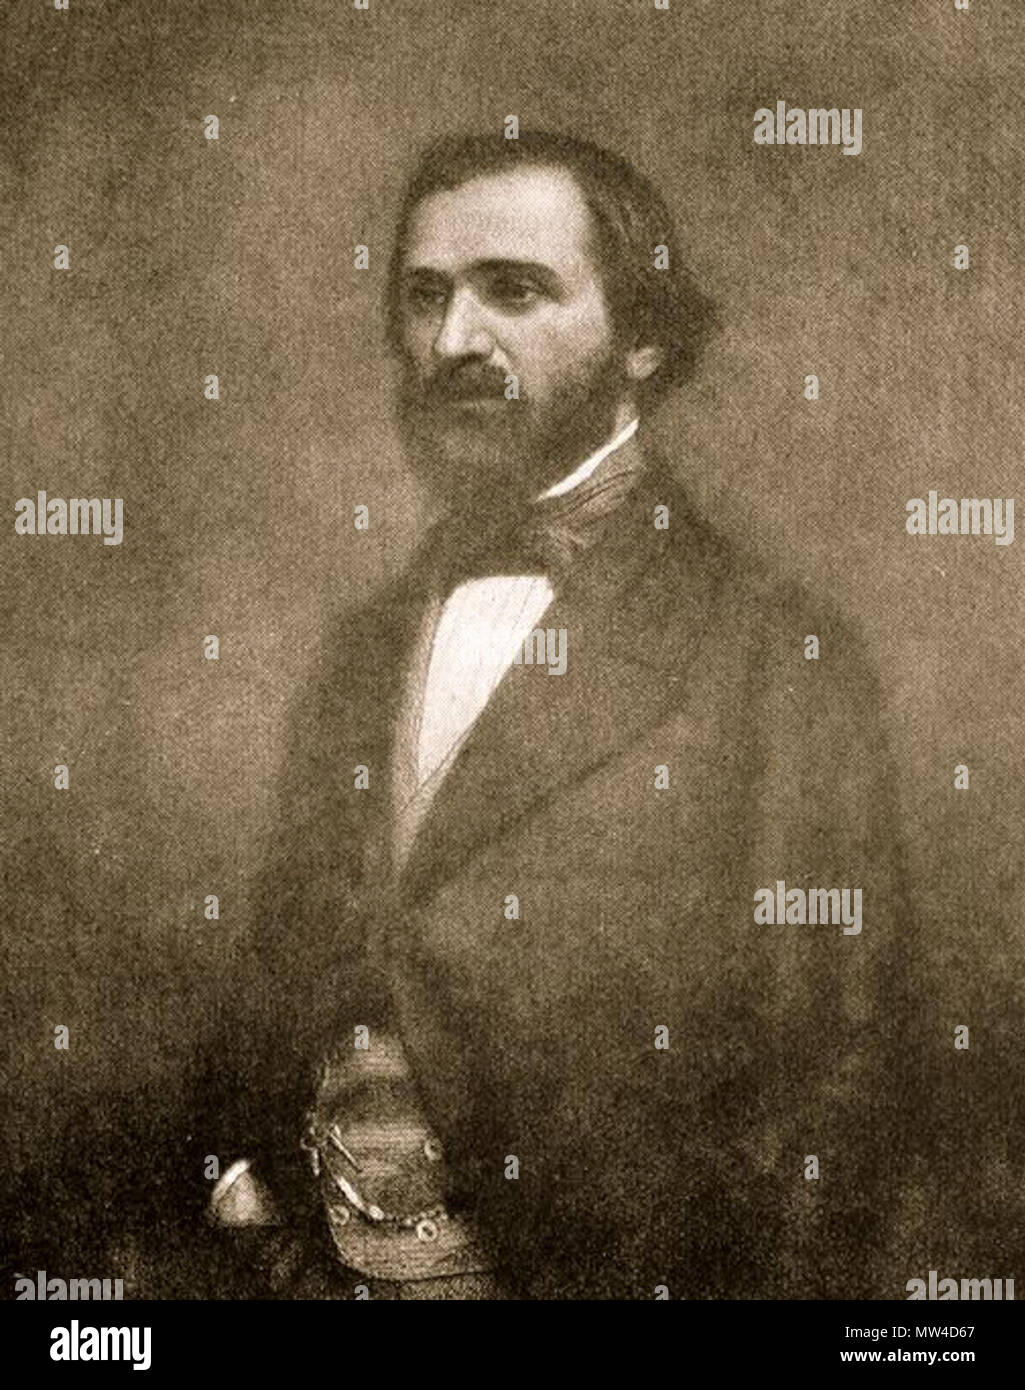 246 Giuseppe Verdi portrait Stock Photo